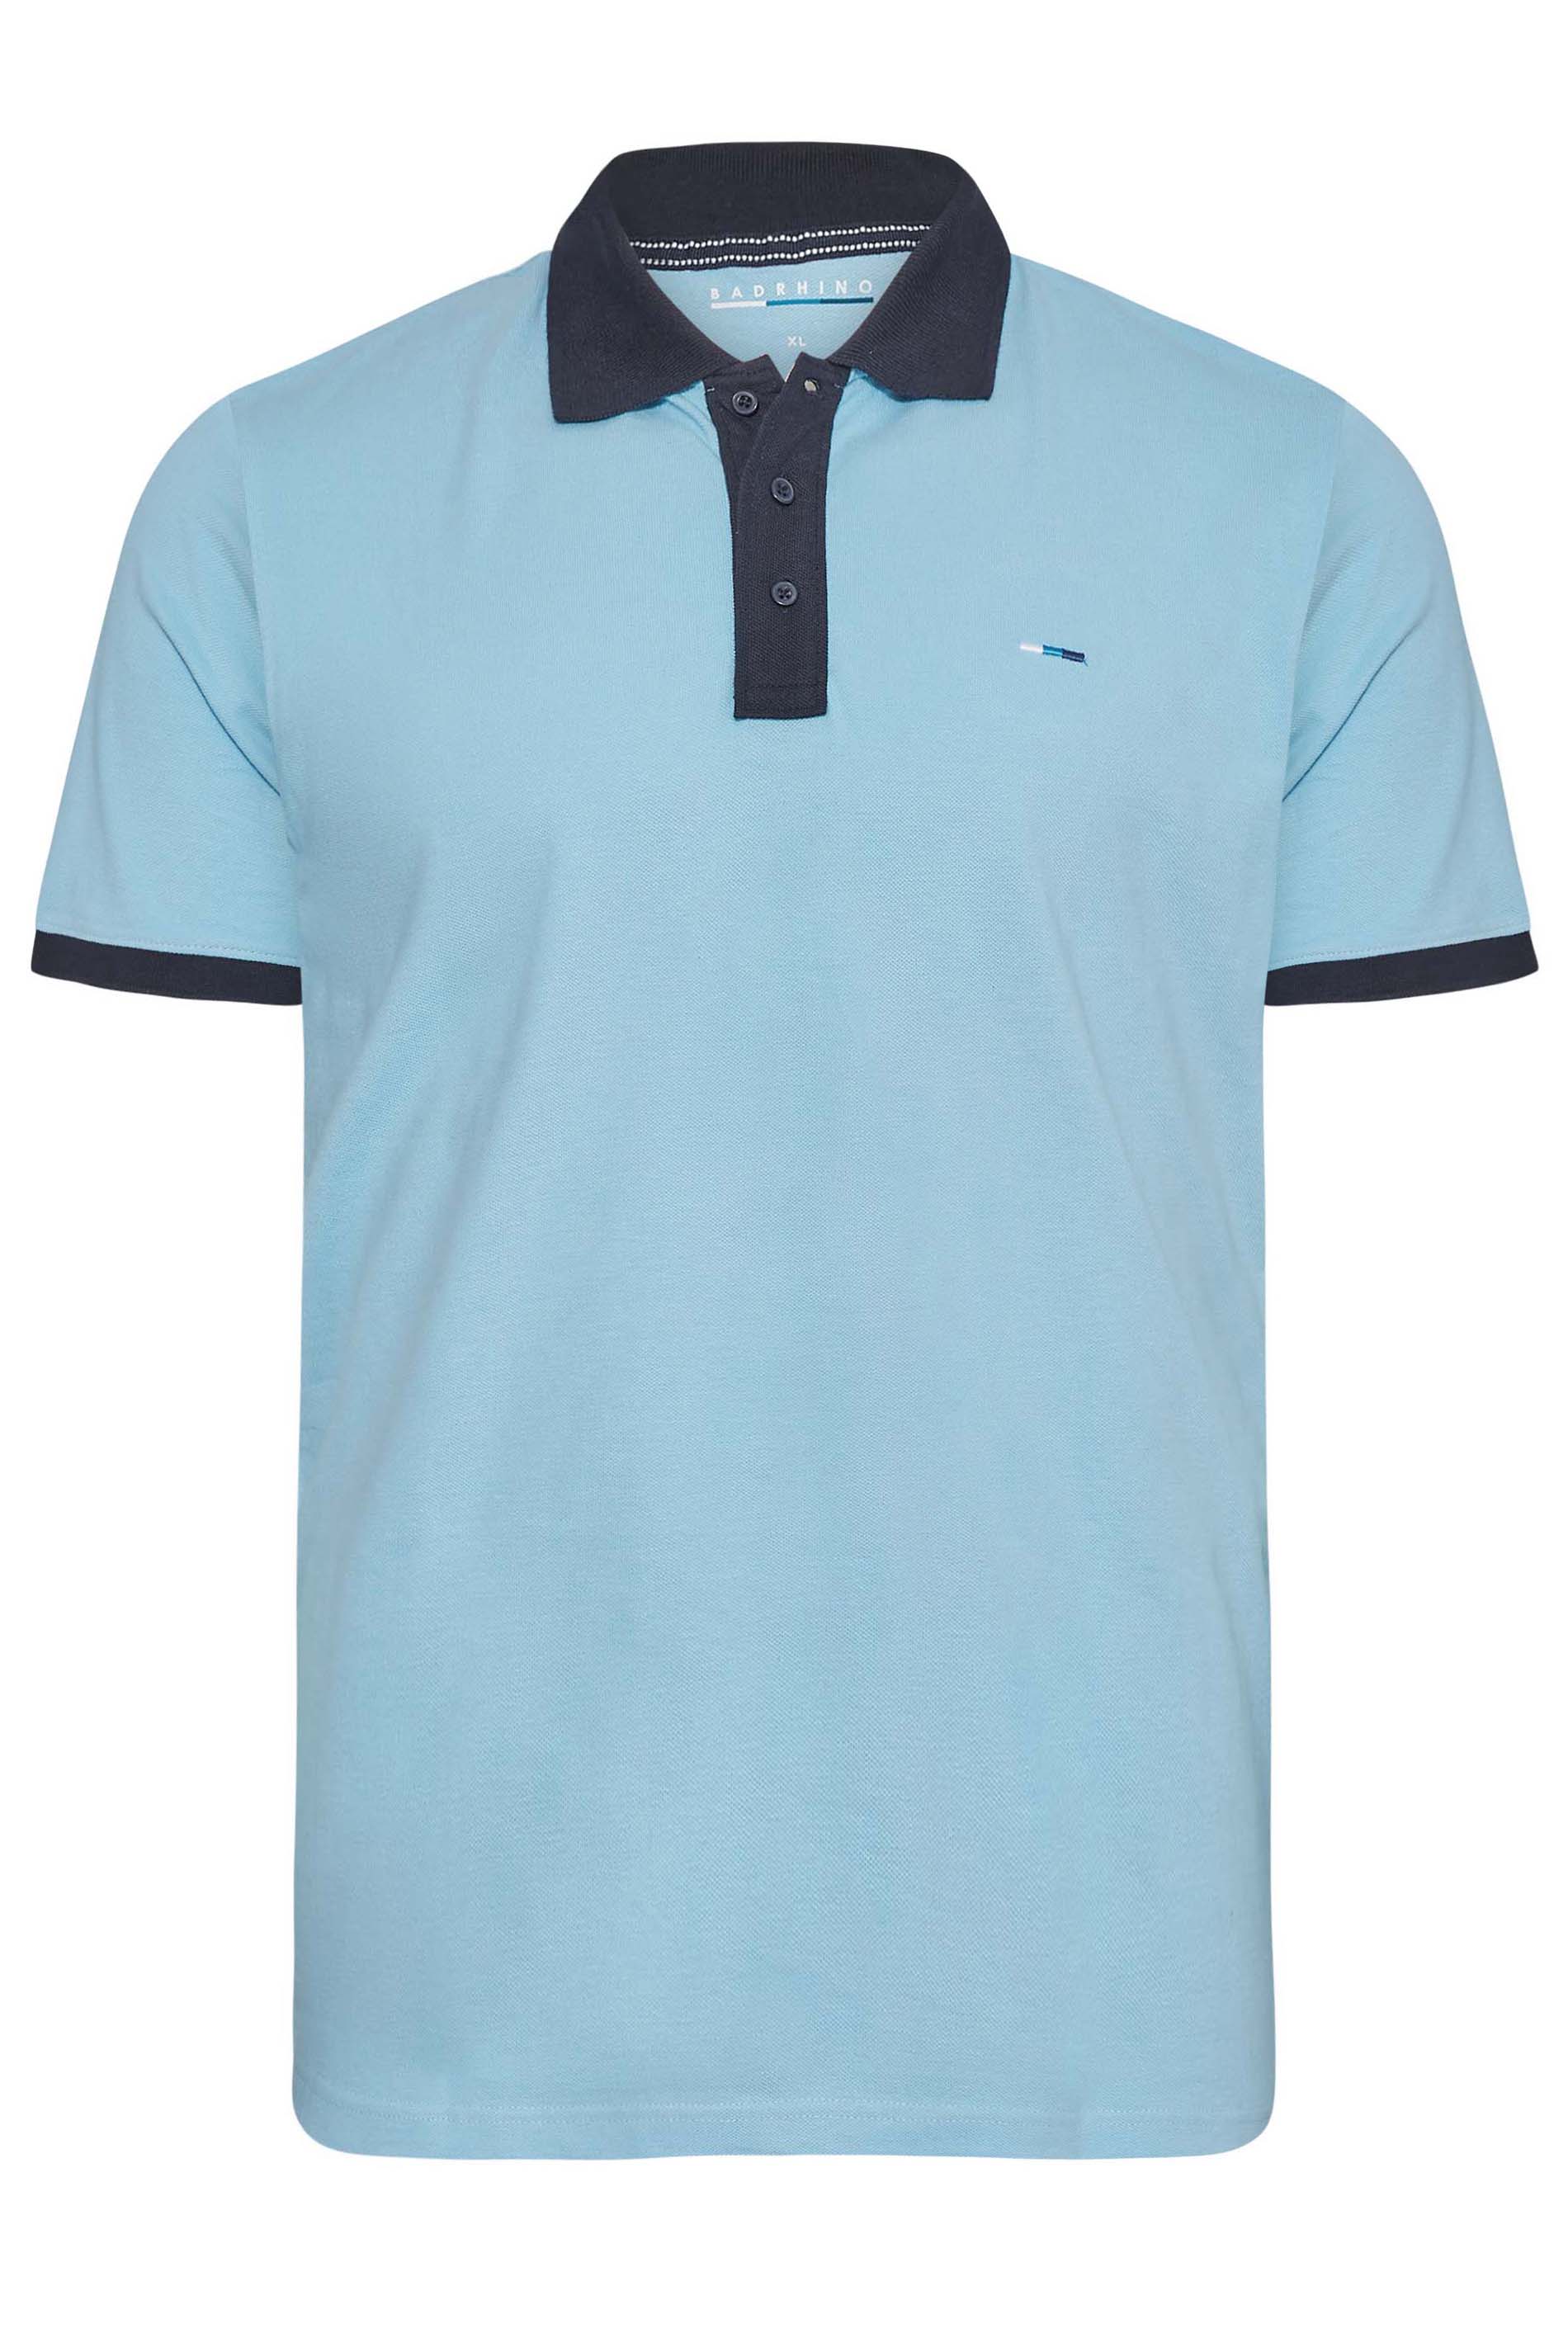 BadRhino Big & Tall Blue Contrast Collar Polo Shirt | BadRhino  3